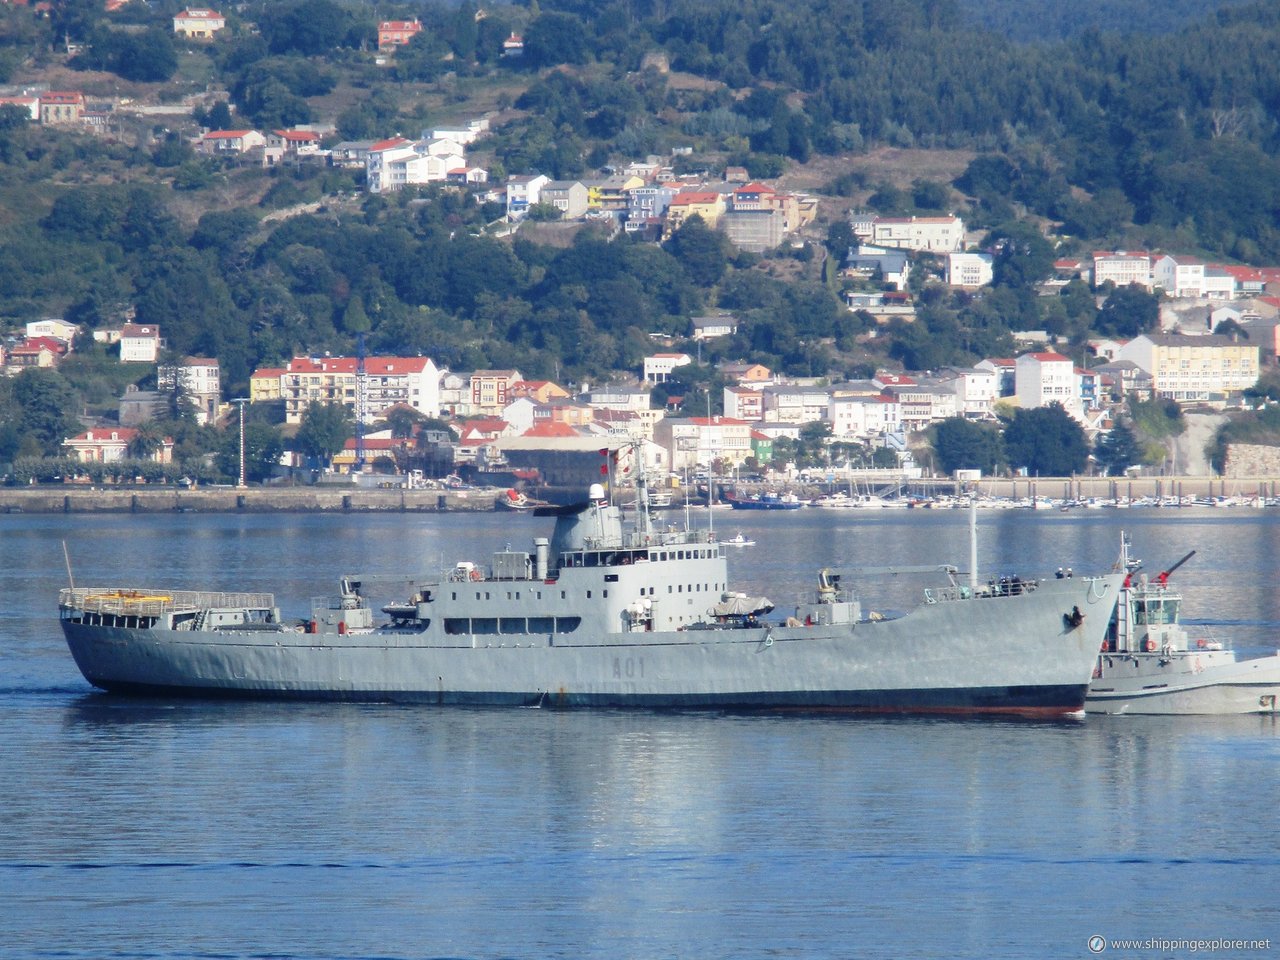 Spanish Navy